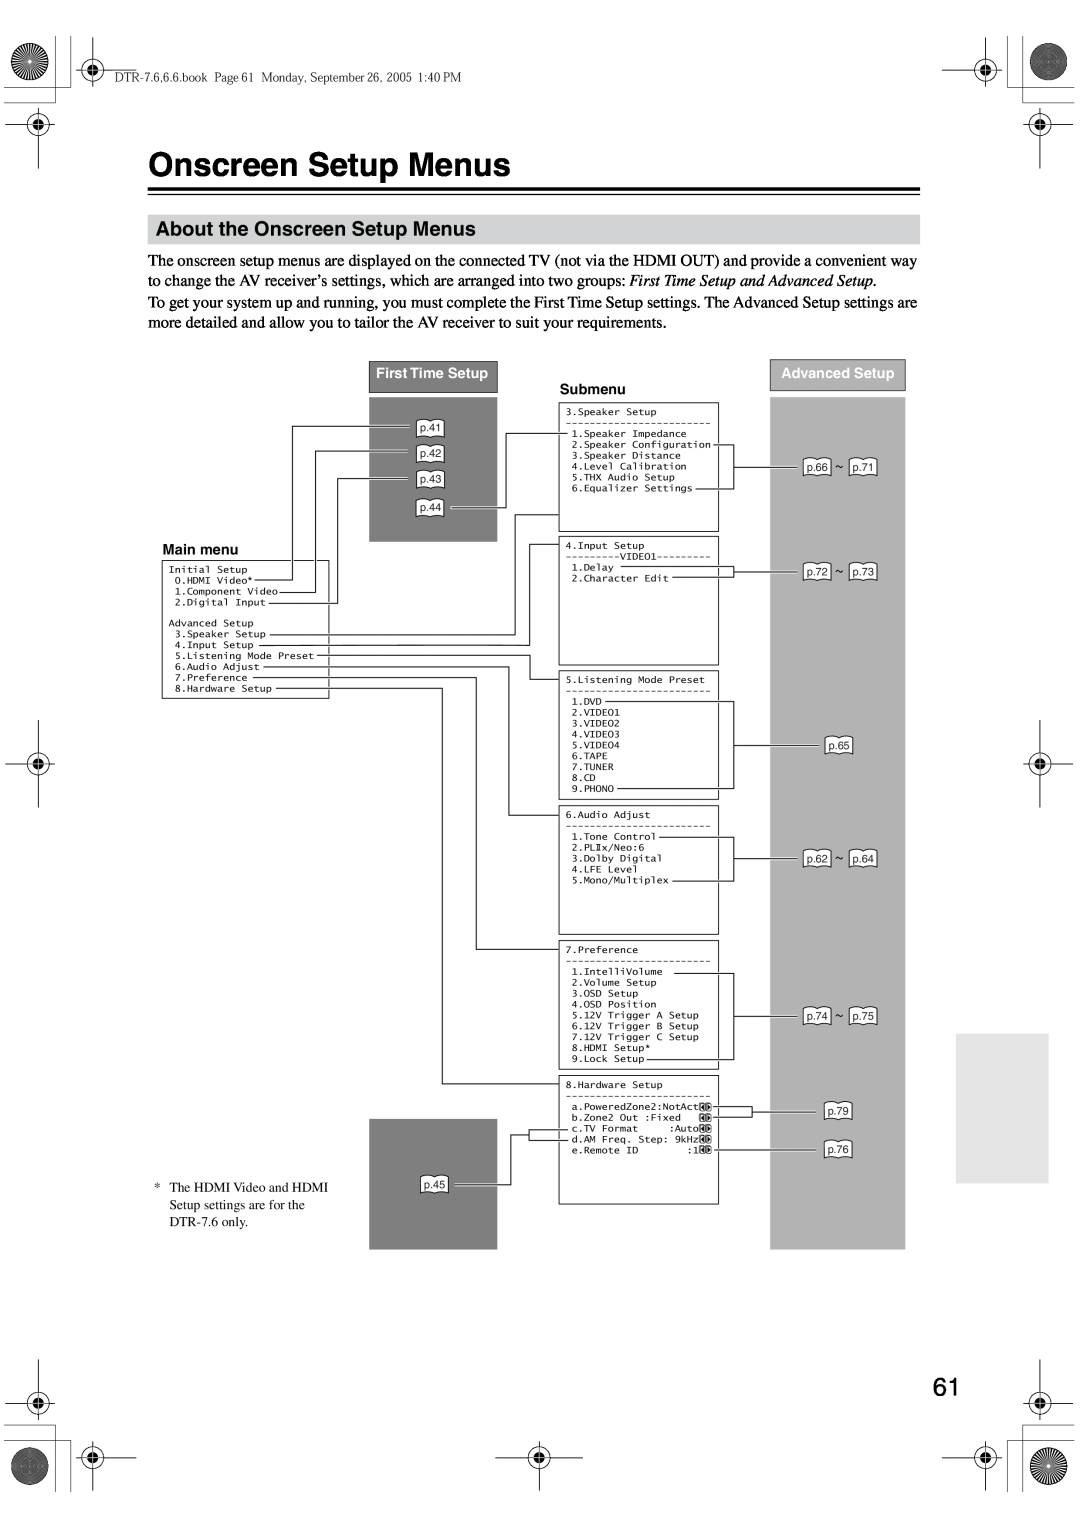 Integra DTR-7.6/6.6 instruction manual About the Onscreen Setup Menus 